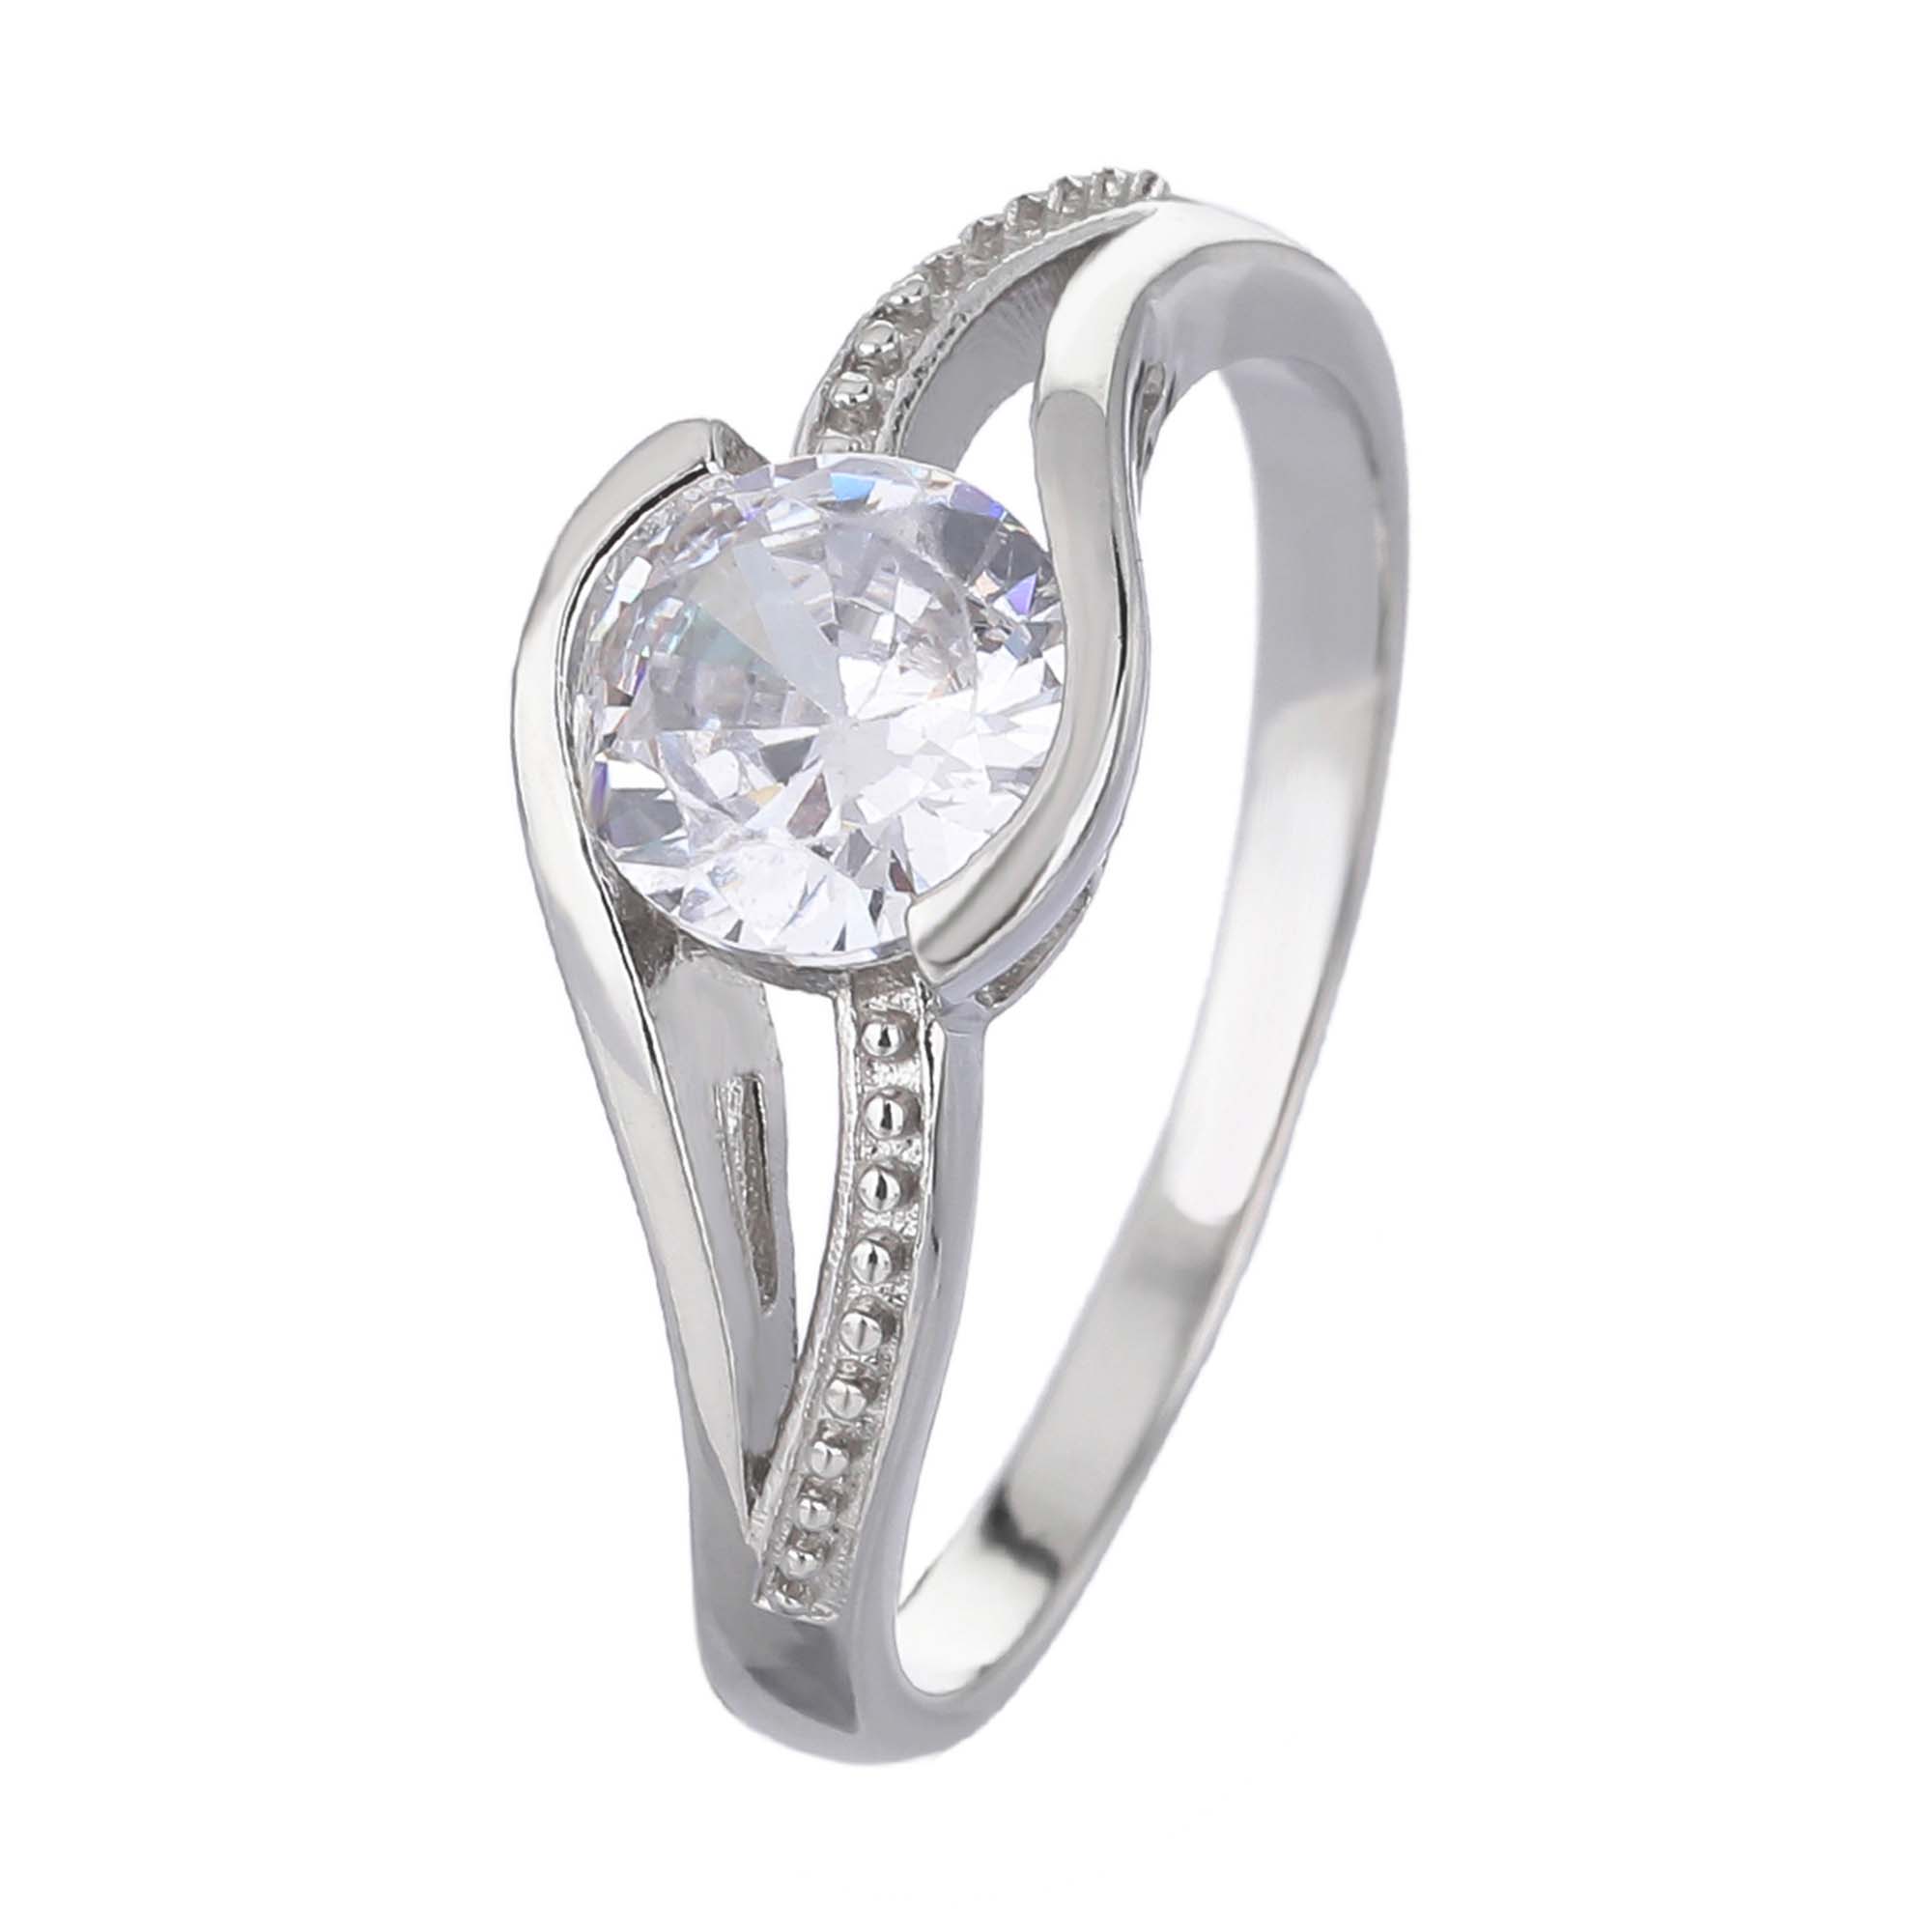 Stříbrný prsten SOLITÉR bílý VLNKY Velikost prstenu: 62 Ag 925/1000